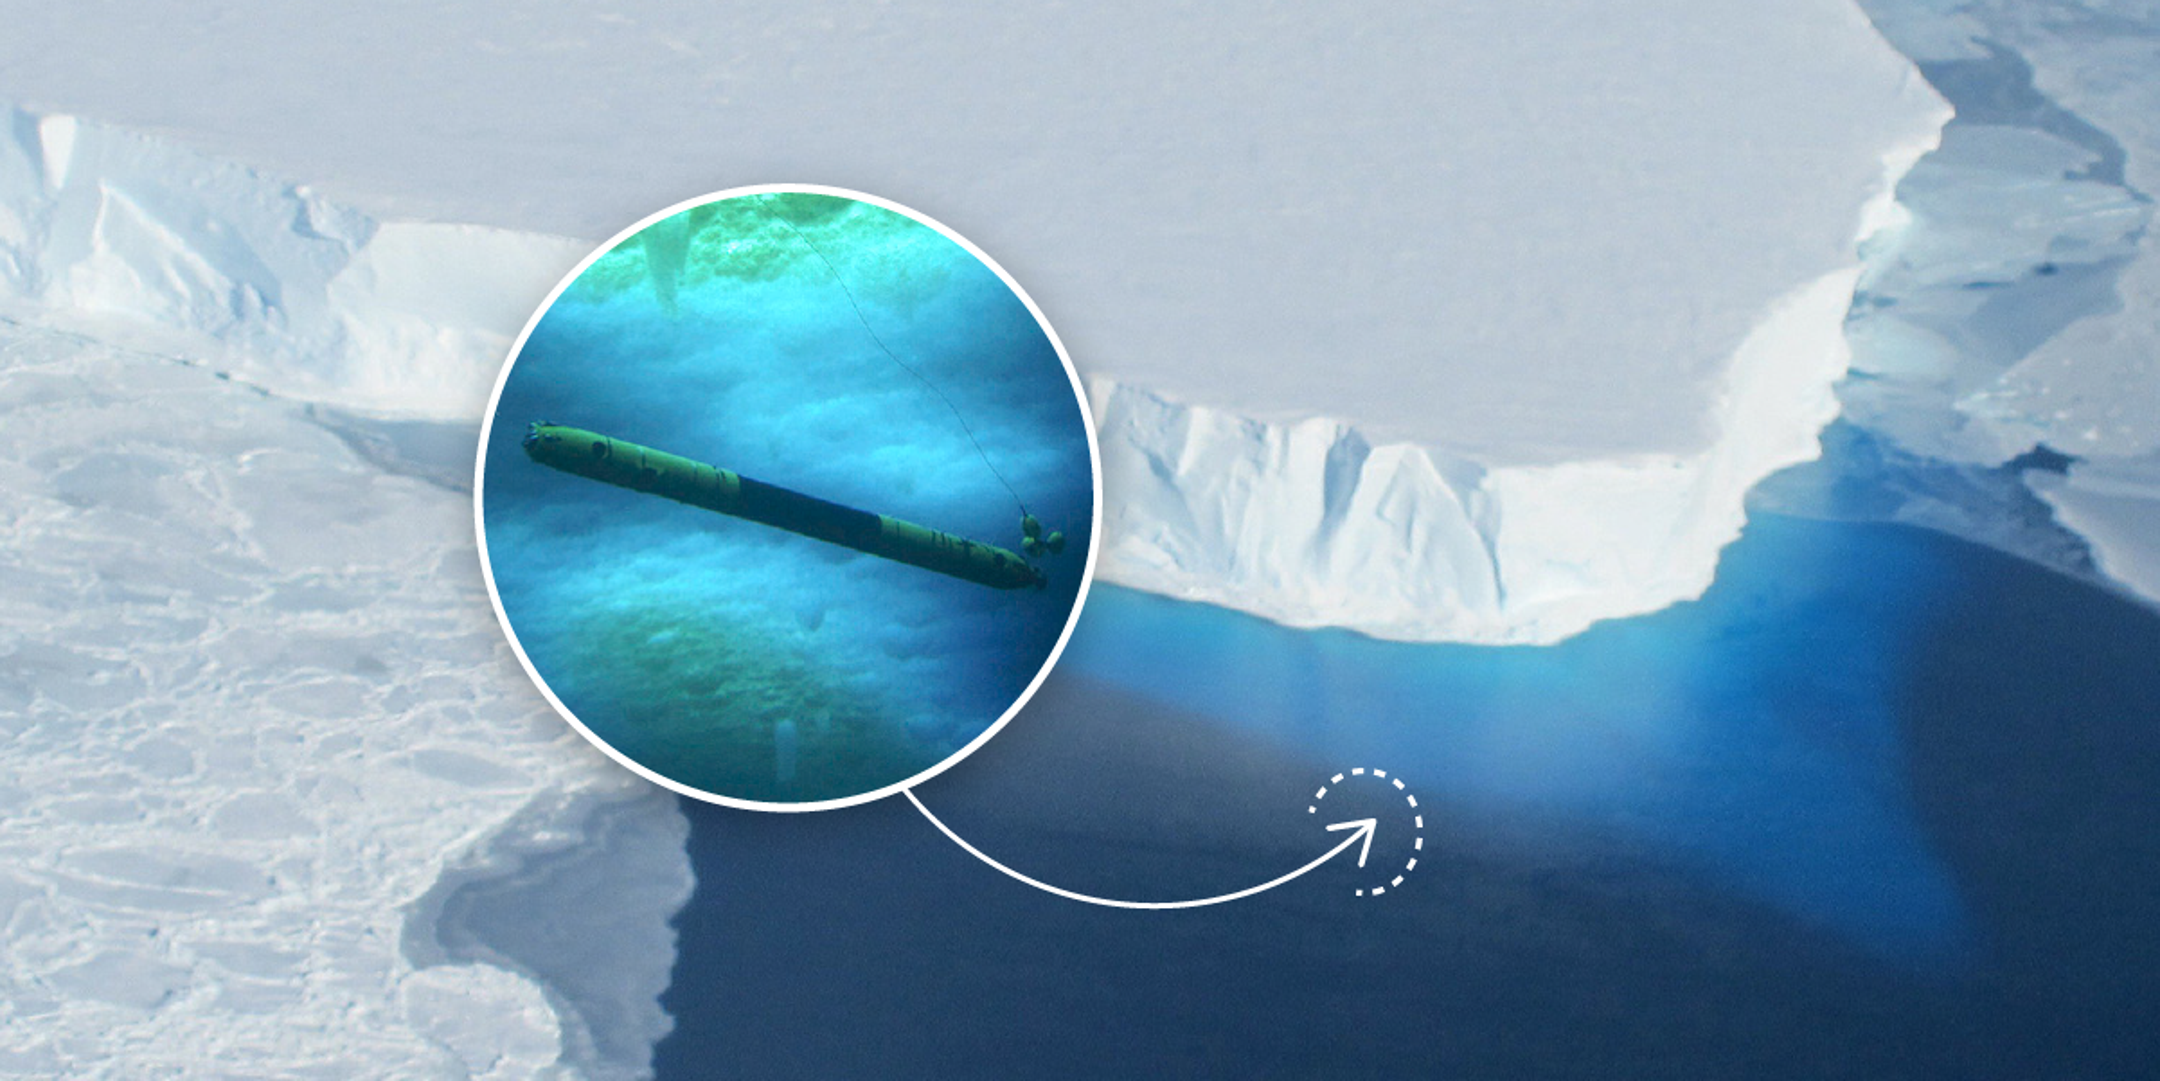 More information about "Ανταρκτική: Οι επιστήμονες κρούουν τον κώδωνα του κινδύνου για τον «Παγετώνα της Αποκάλυψης»"